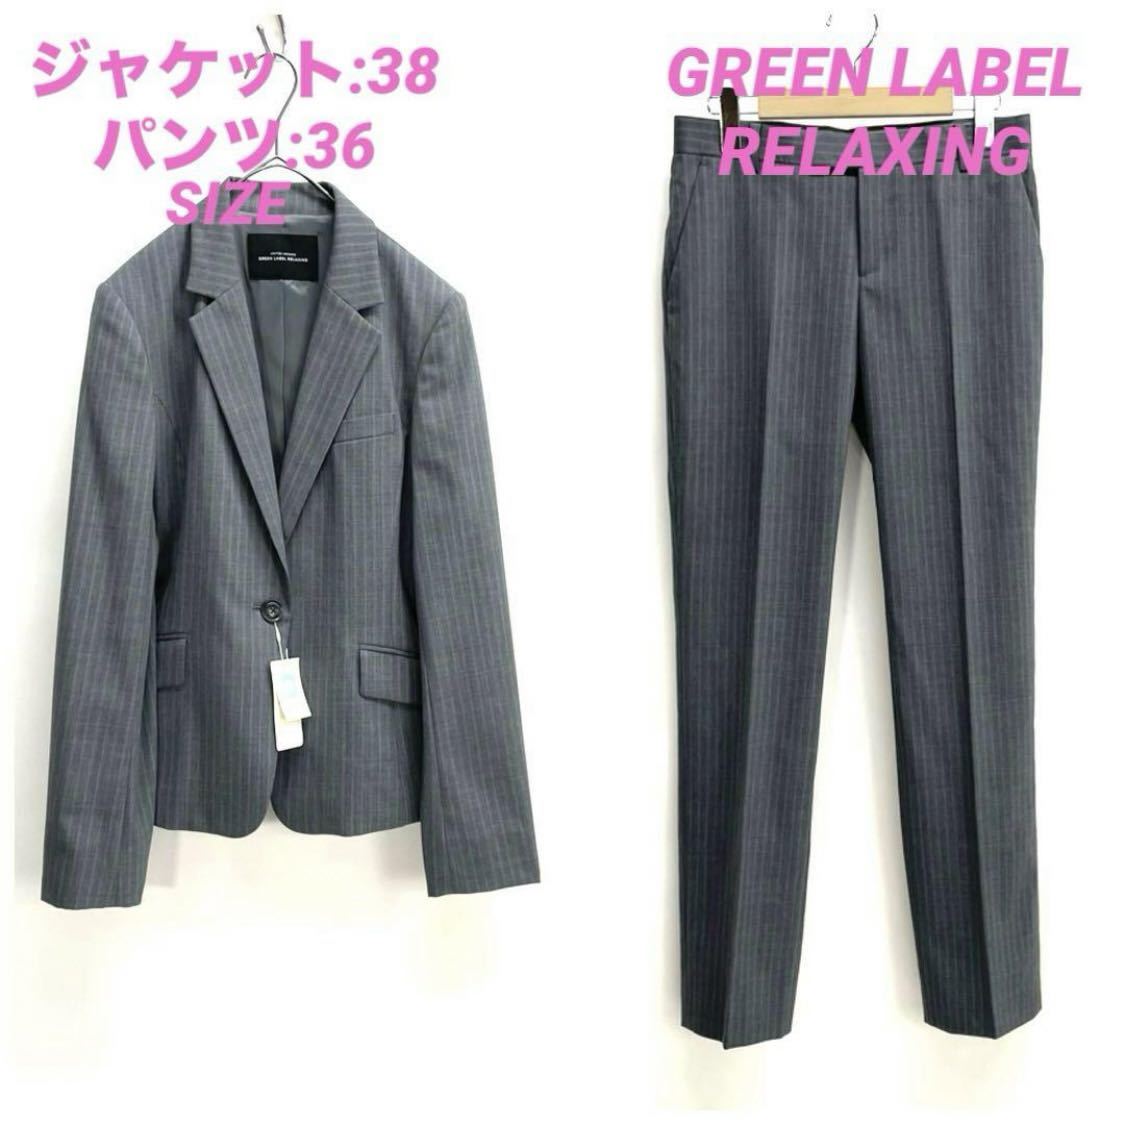 GREEN LABEL RELAXING 新品タグ付 パンツスーツ B8716